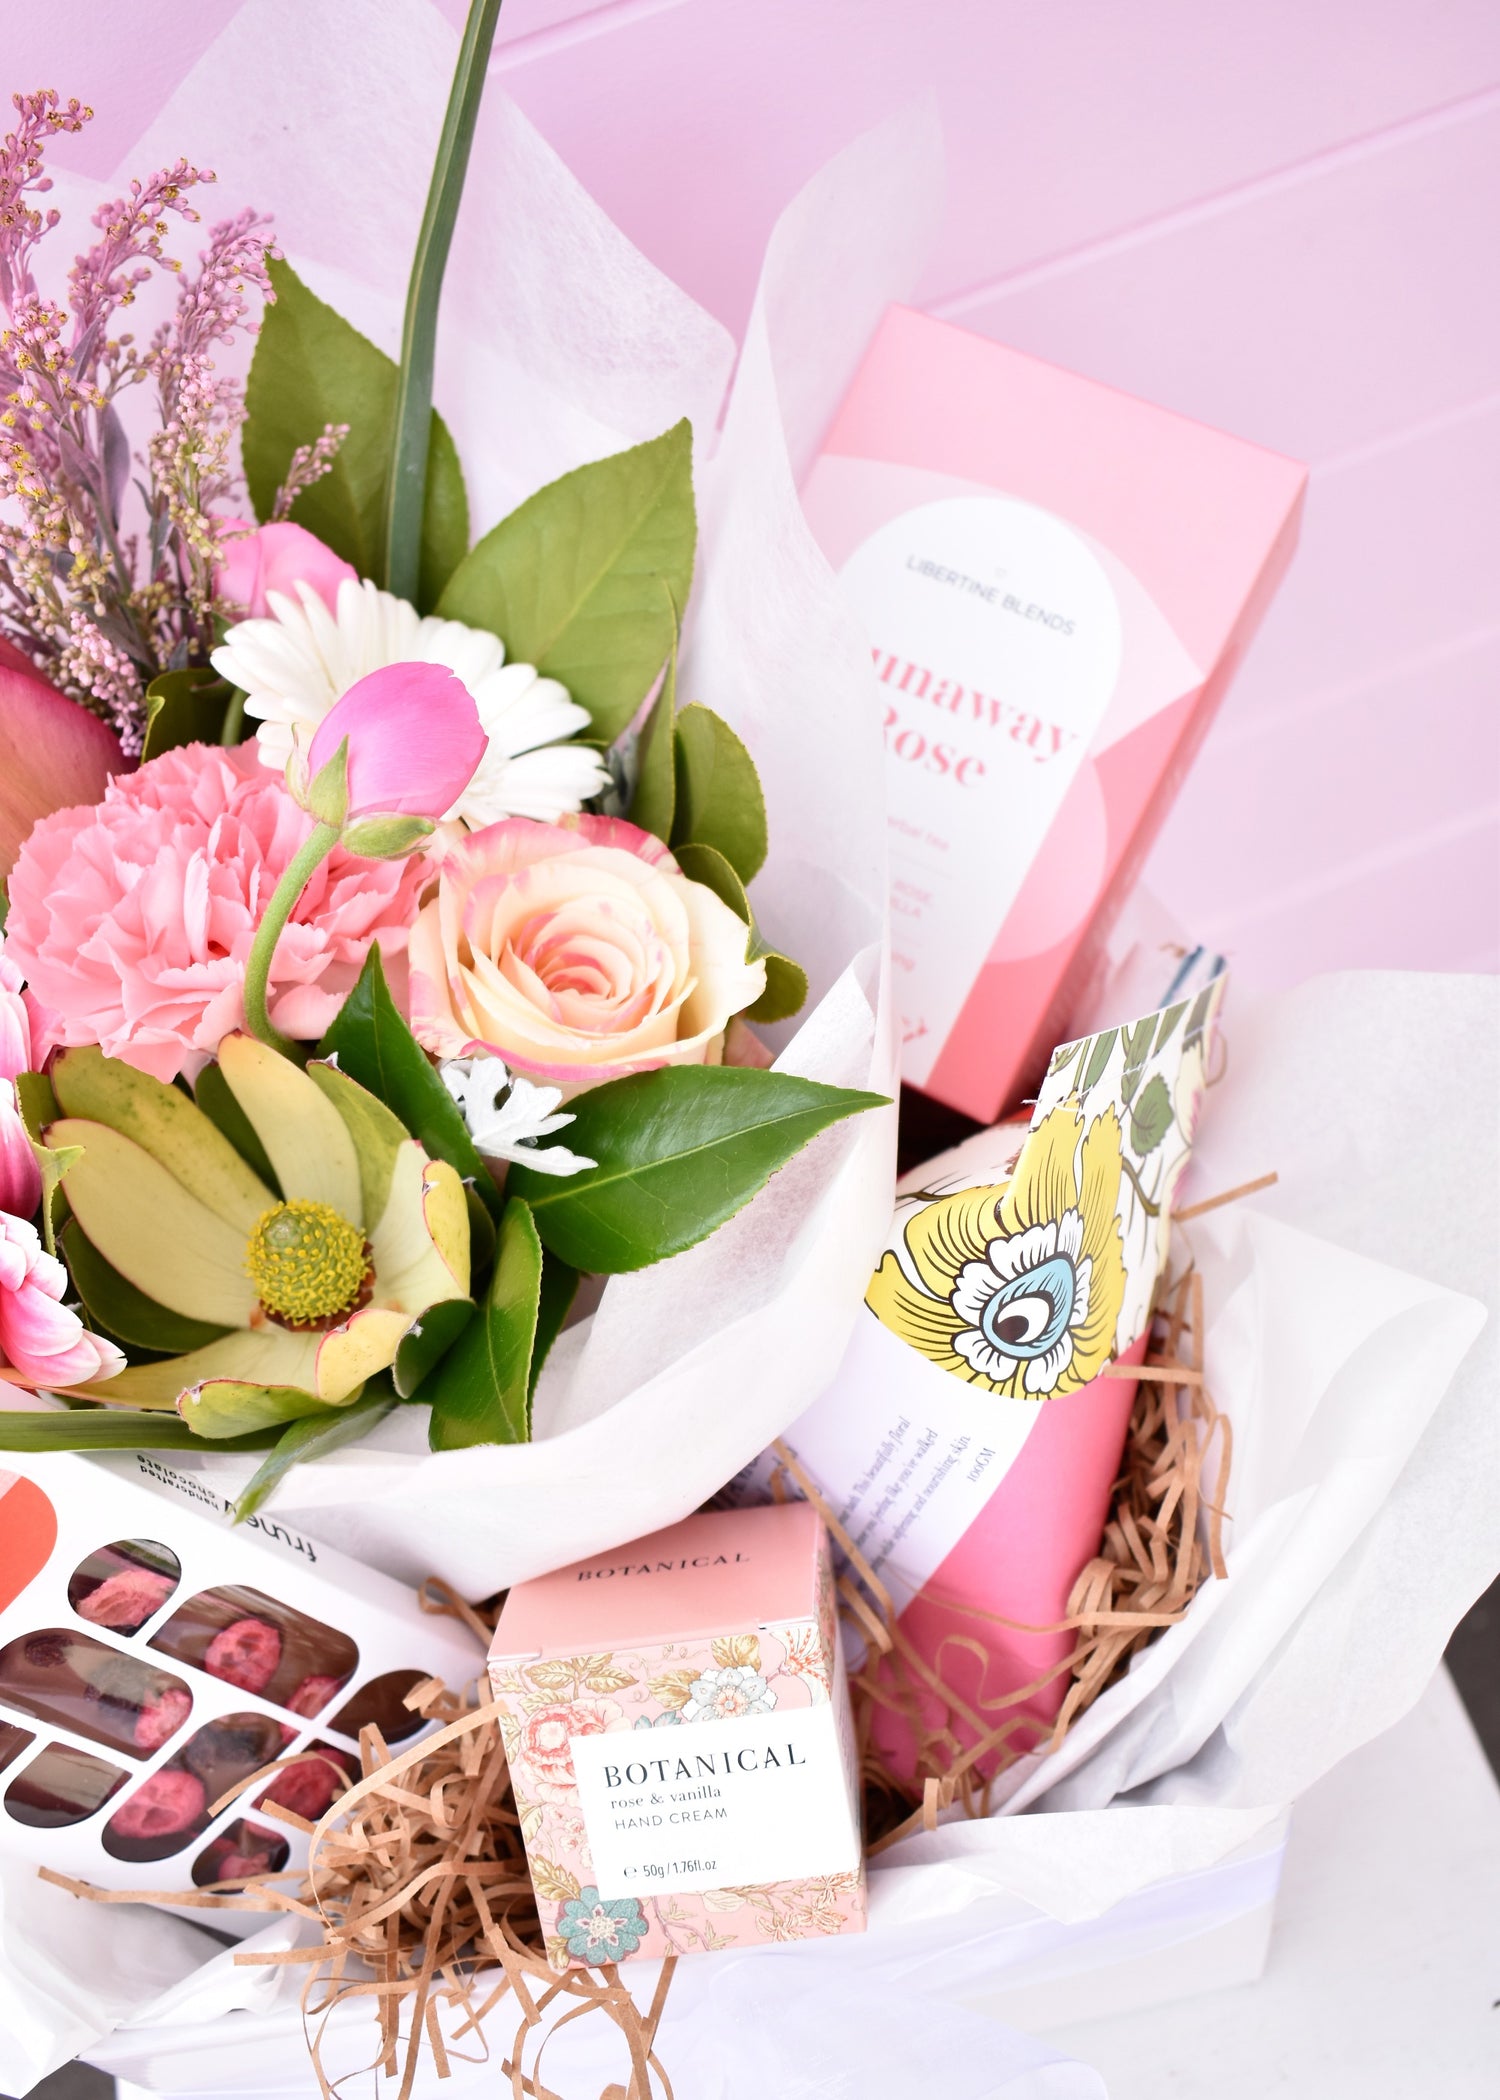 Gift hamper created by florist. Pretty pink fresh flowers, chocolate, bath bom, hand cream and box of rose tea